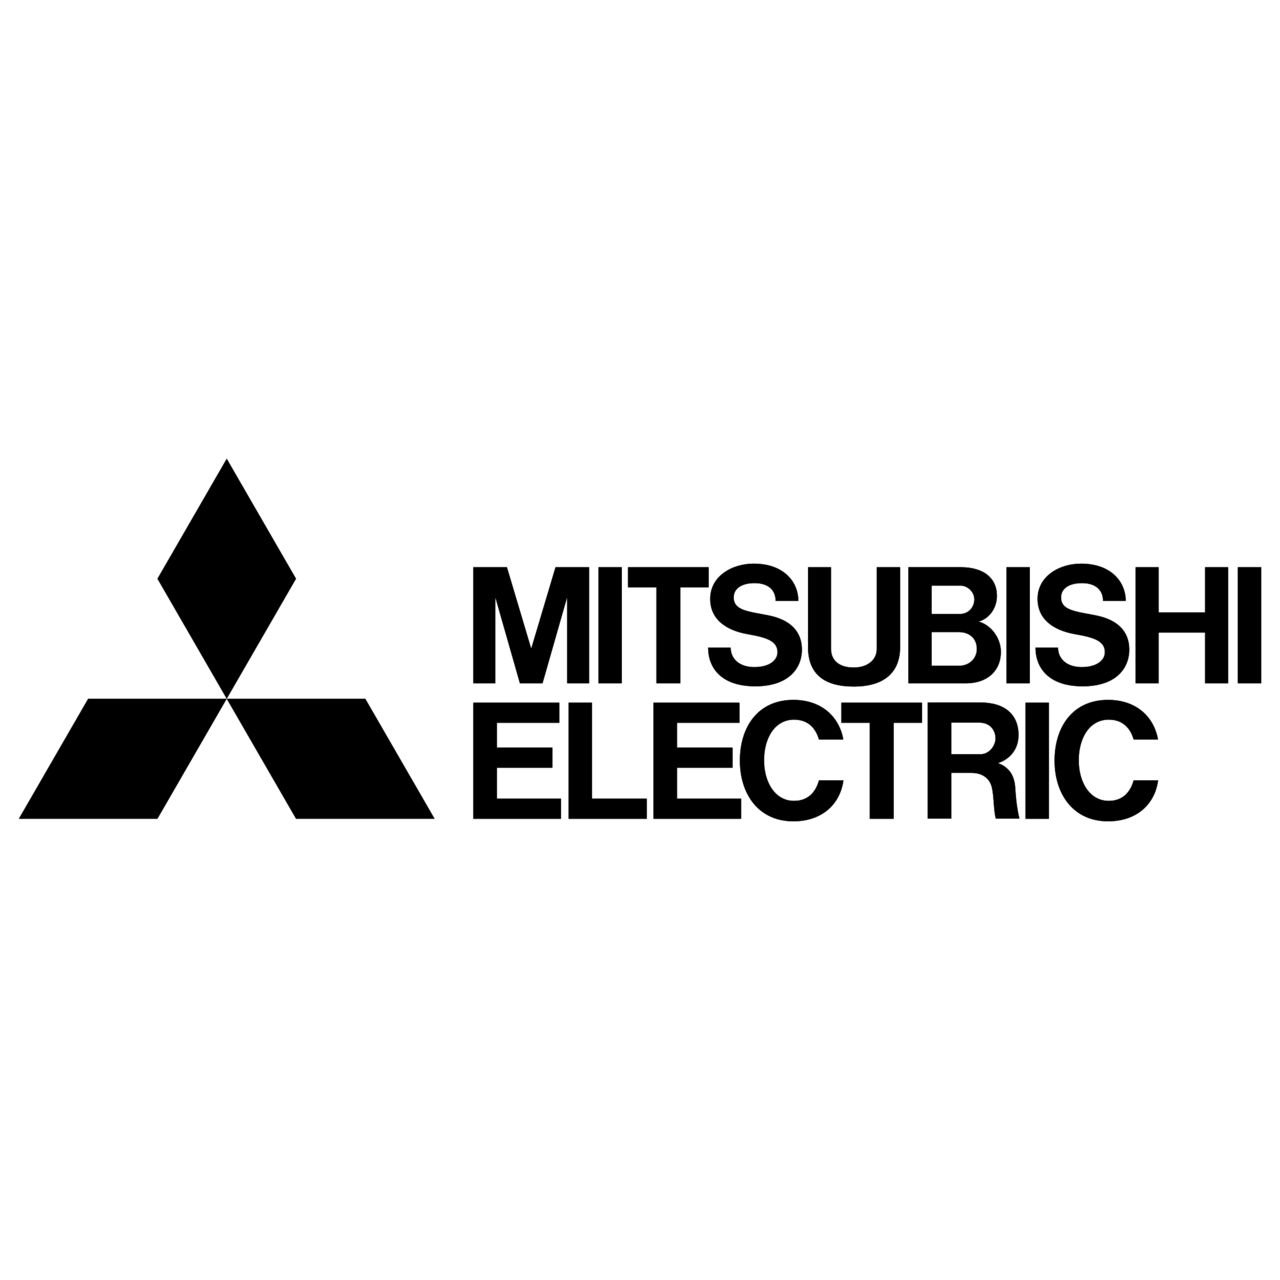 mitsubishi-electric-logo-black-and-white